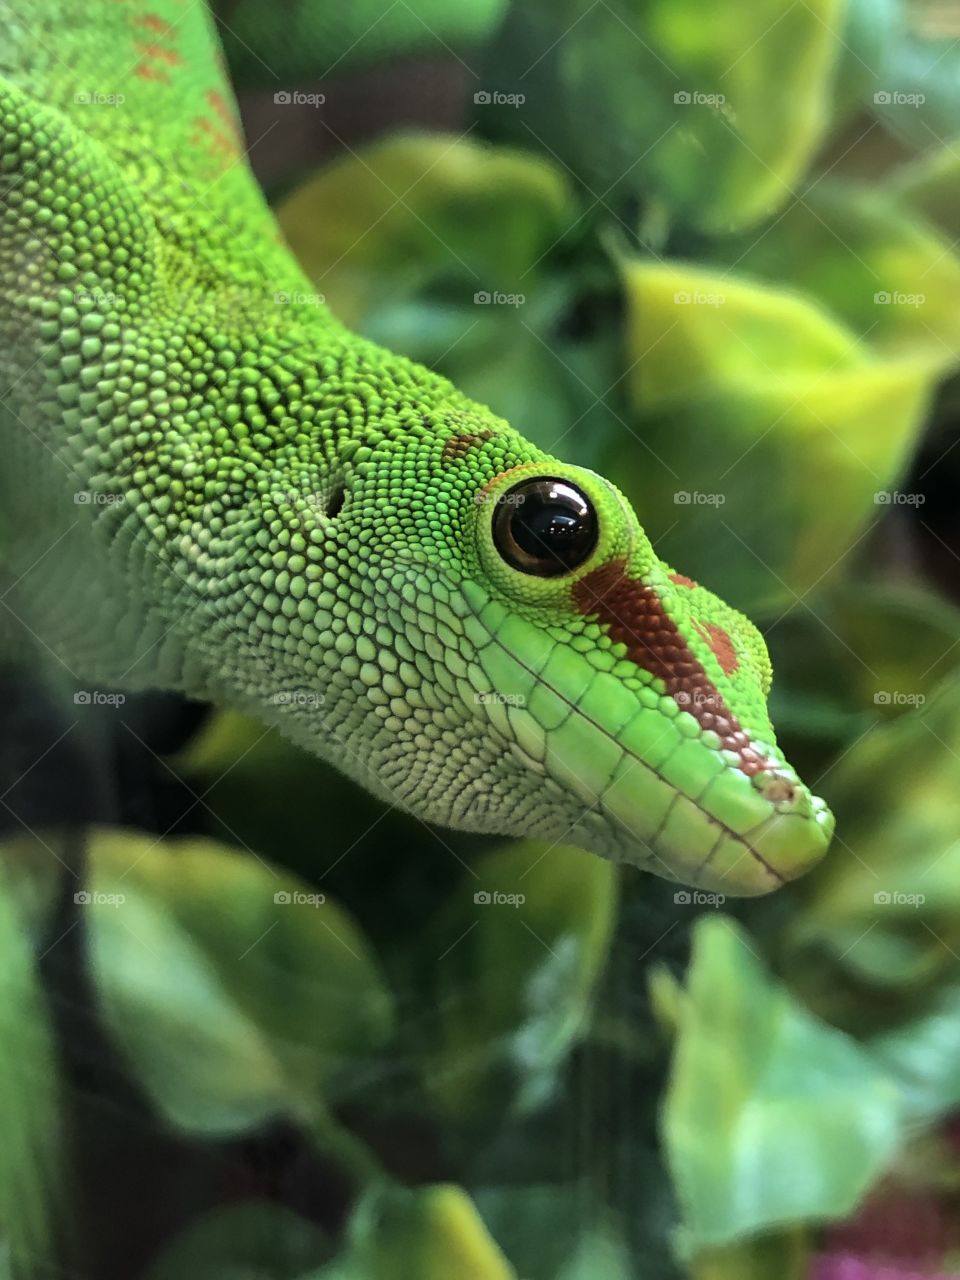 Handsome giant gecko 